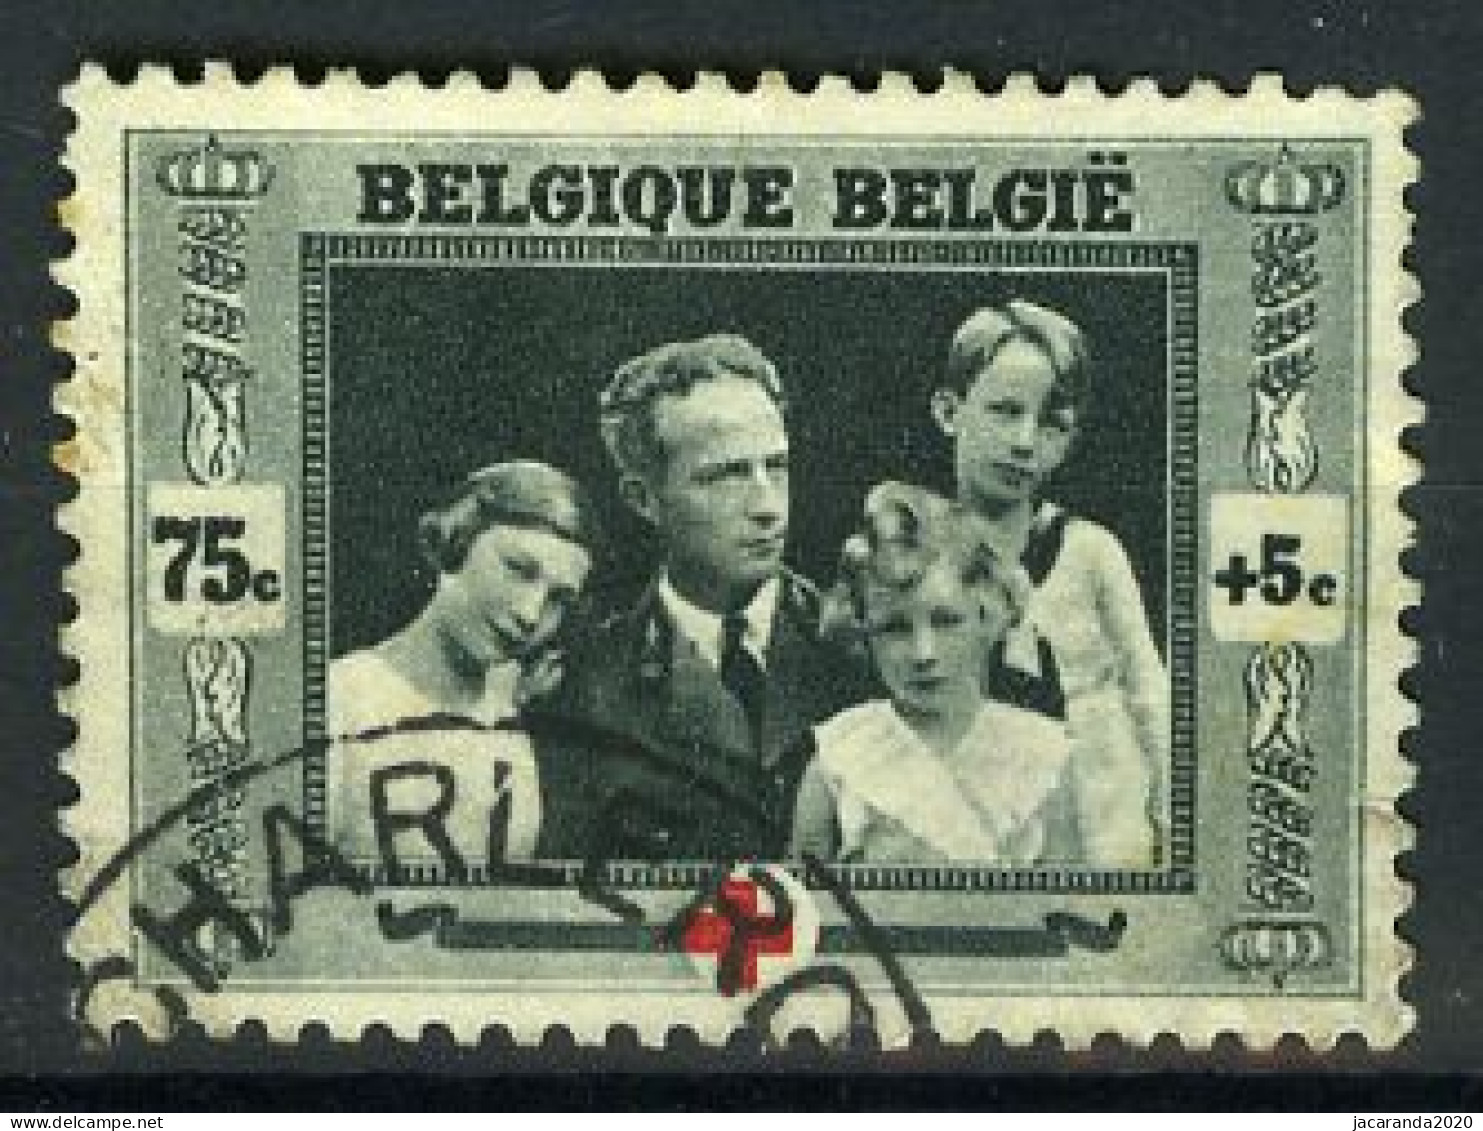 België 499 - Rode Kruis - Croix-Rouge - Koning Leopold III En Kinderen - Roi Léopold III - Gestempeld - Oblitéré - Used - Oblitérés